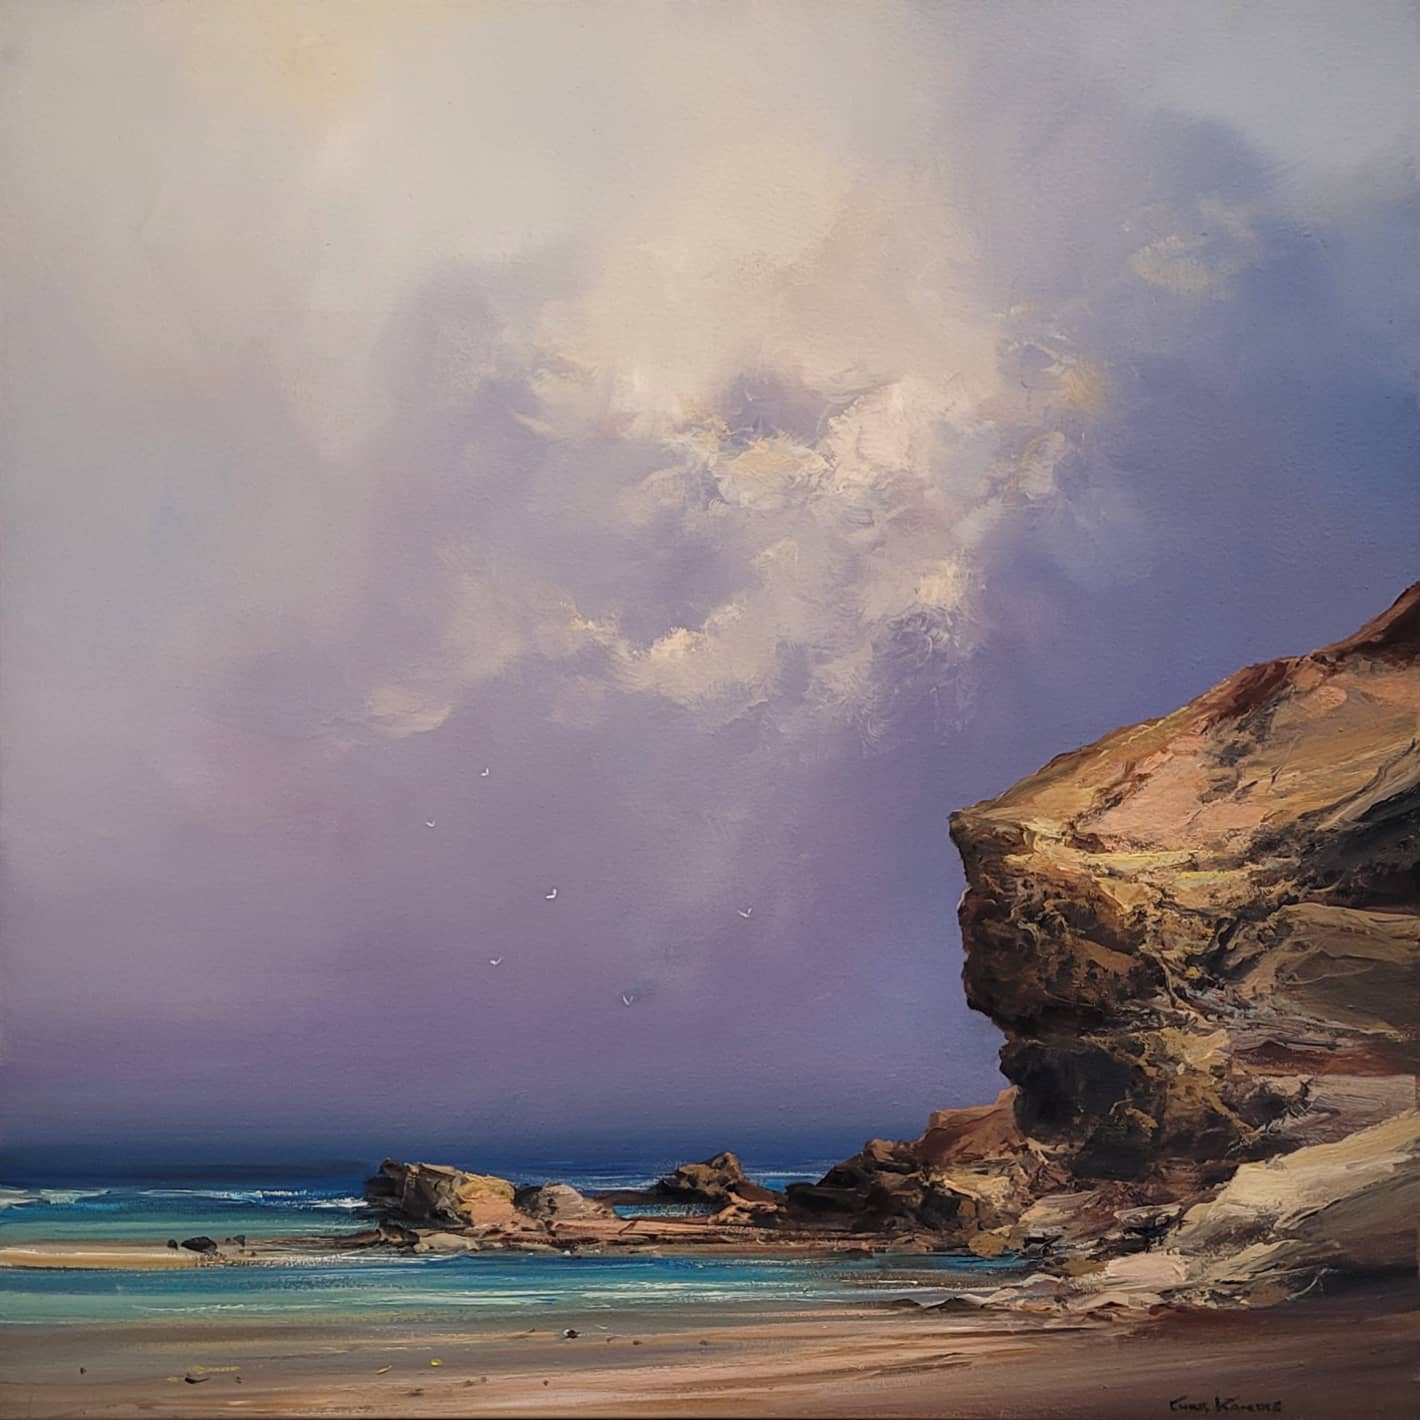 Chris Kandis Painting ~ 'Summer Storm Sorrento' - Curate Art & Design Gallery Sorrento Mornington Peninsula Melbourne